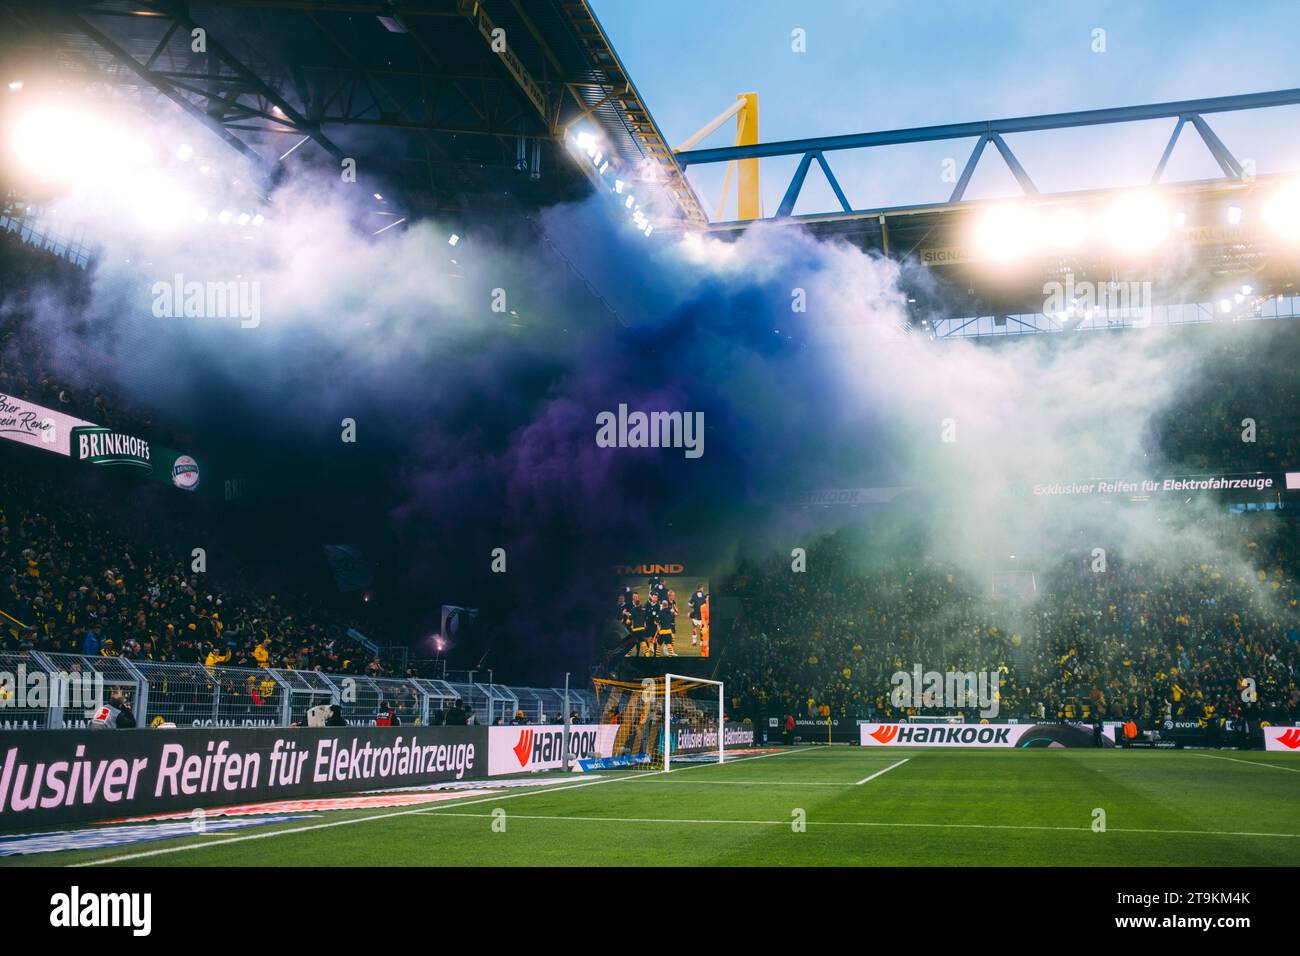 Dortmund, Signal-Iduna-Park, 25.11.23: Lila, Blau, Grün leuchtende Bengalos im Gästeblock der Gladbacher beim 1. Bundesliga Spiel Borussia Dortmund vs Foto Stock